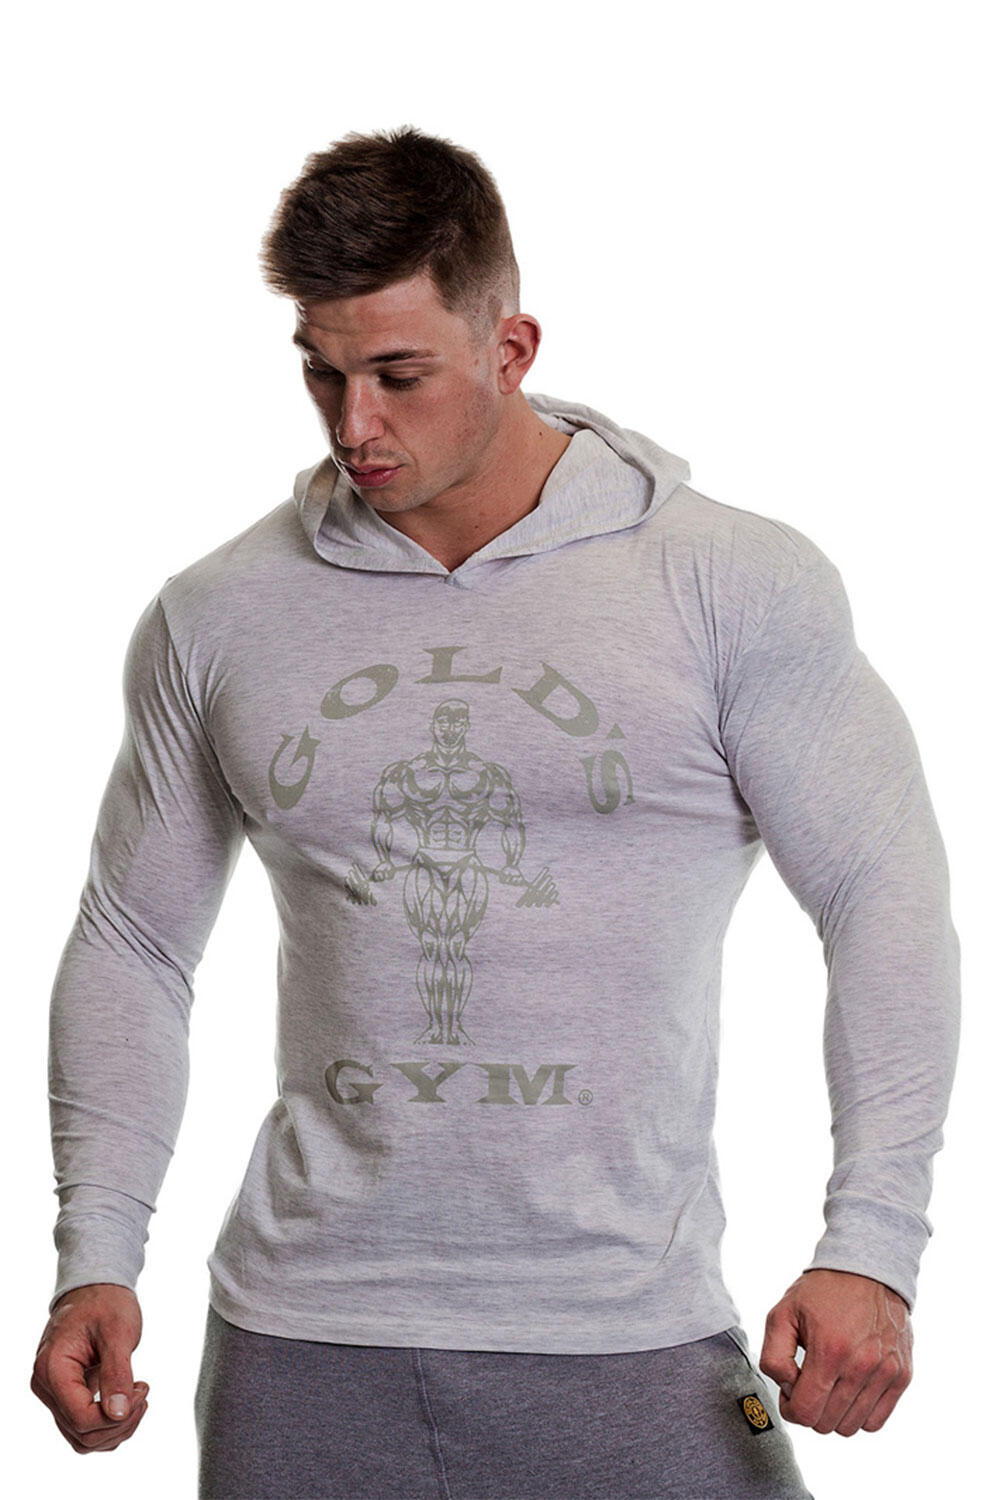 GOLD'S GYM Men's Muscle Joe Printed Long Sleeve Hooded T-Shirt